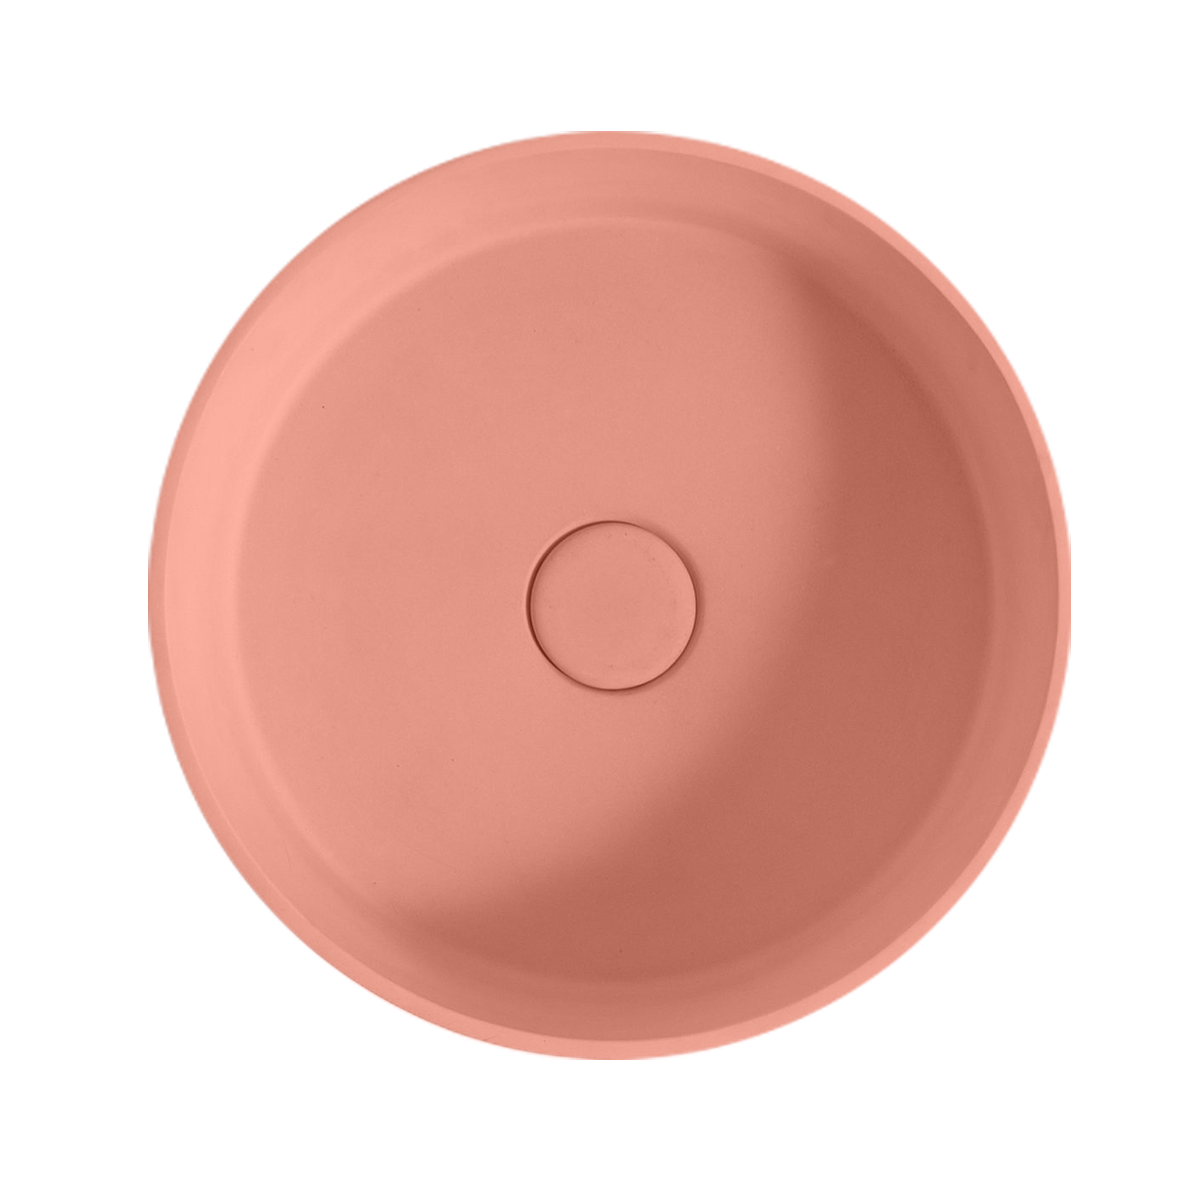 Sol concrete salmon pink round basin 390mm TC0015C21